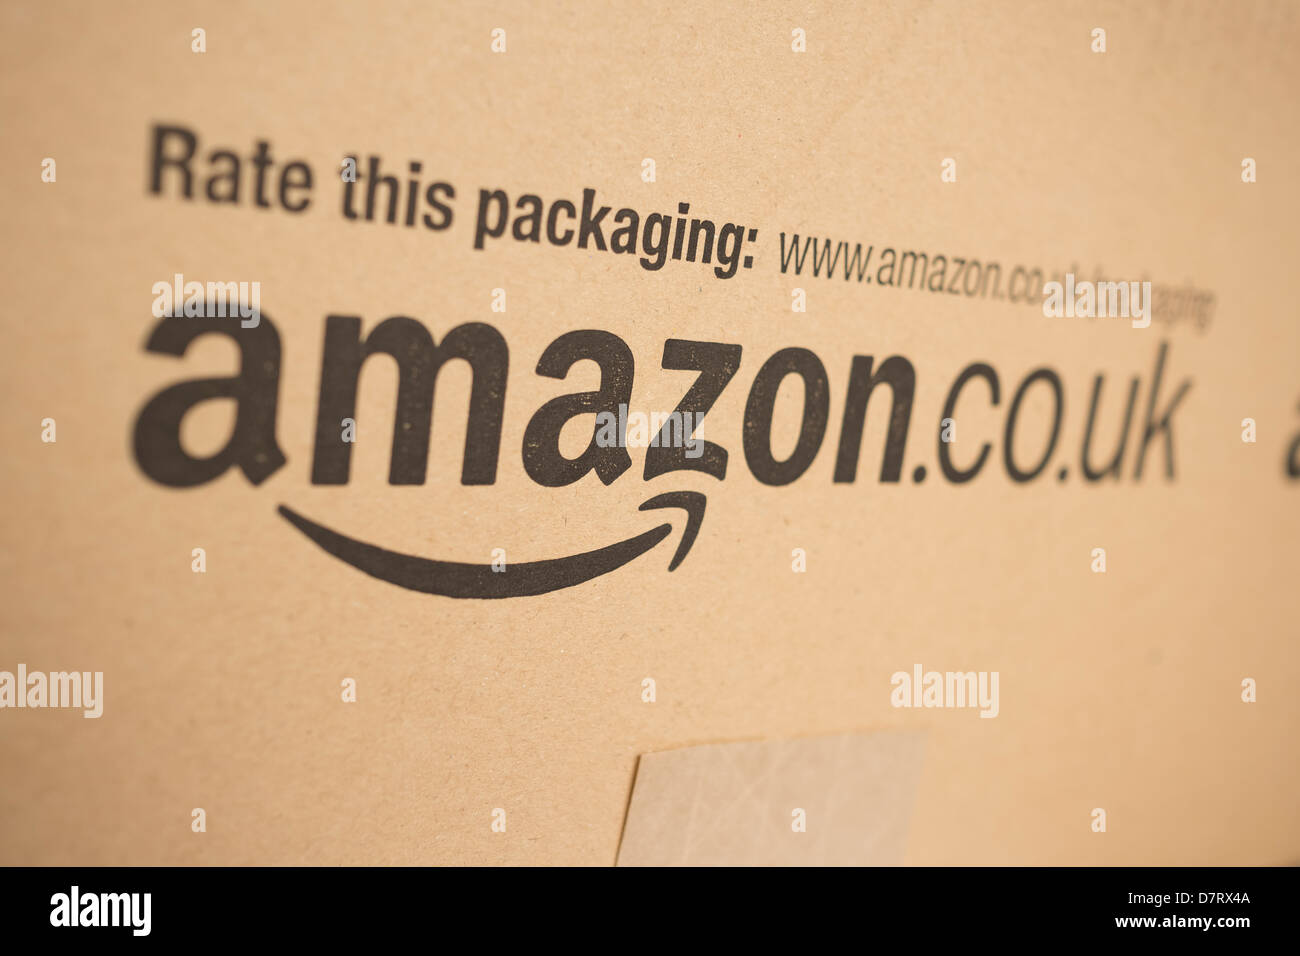 Amazon Internet shopping packaging Stock Photo